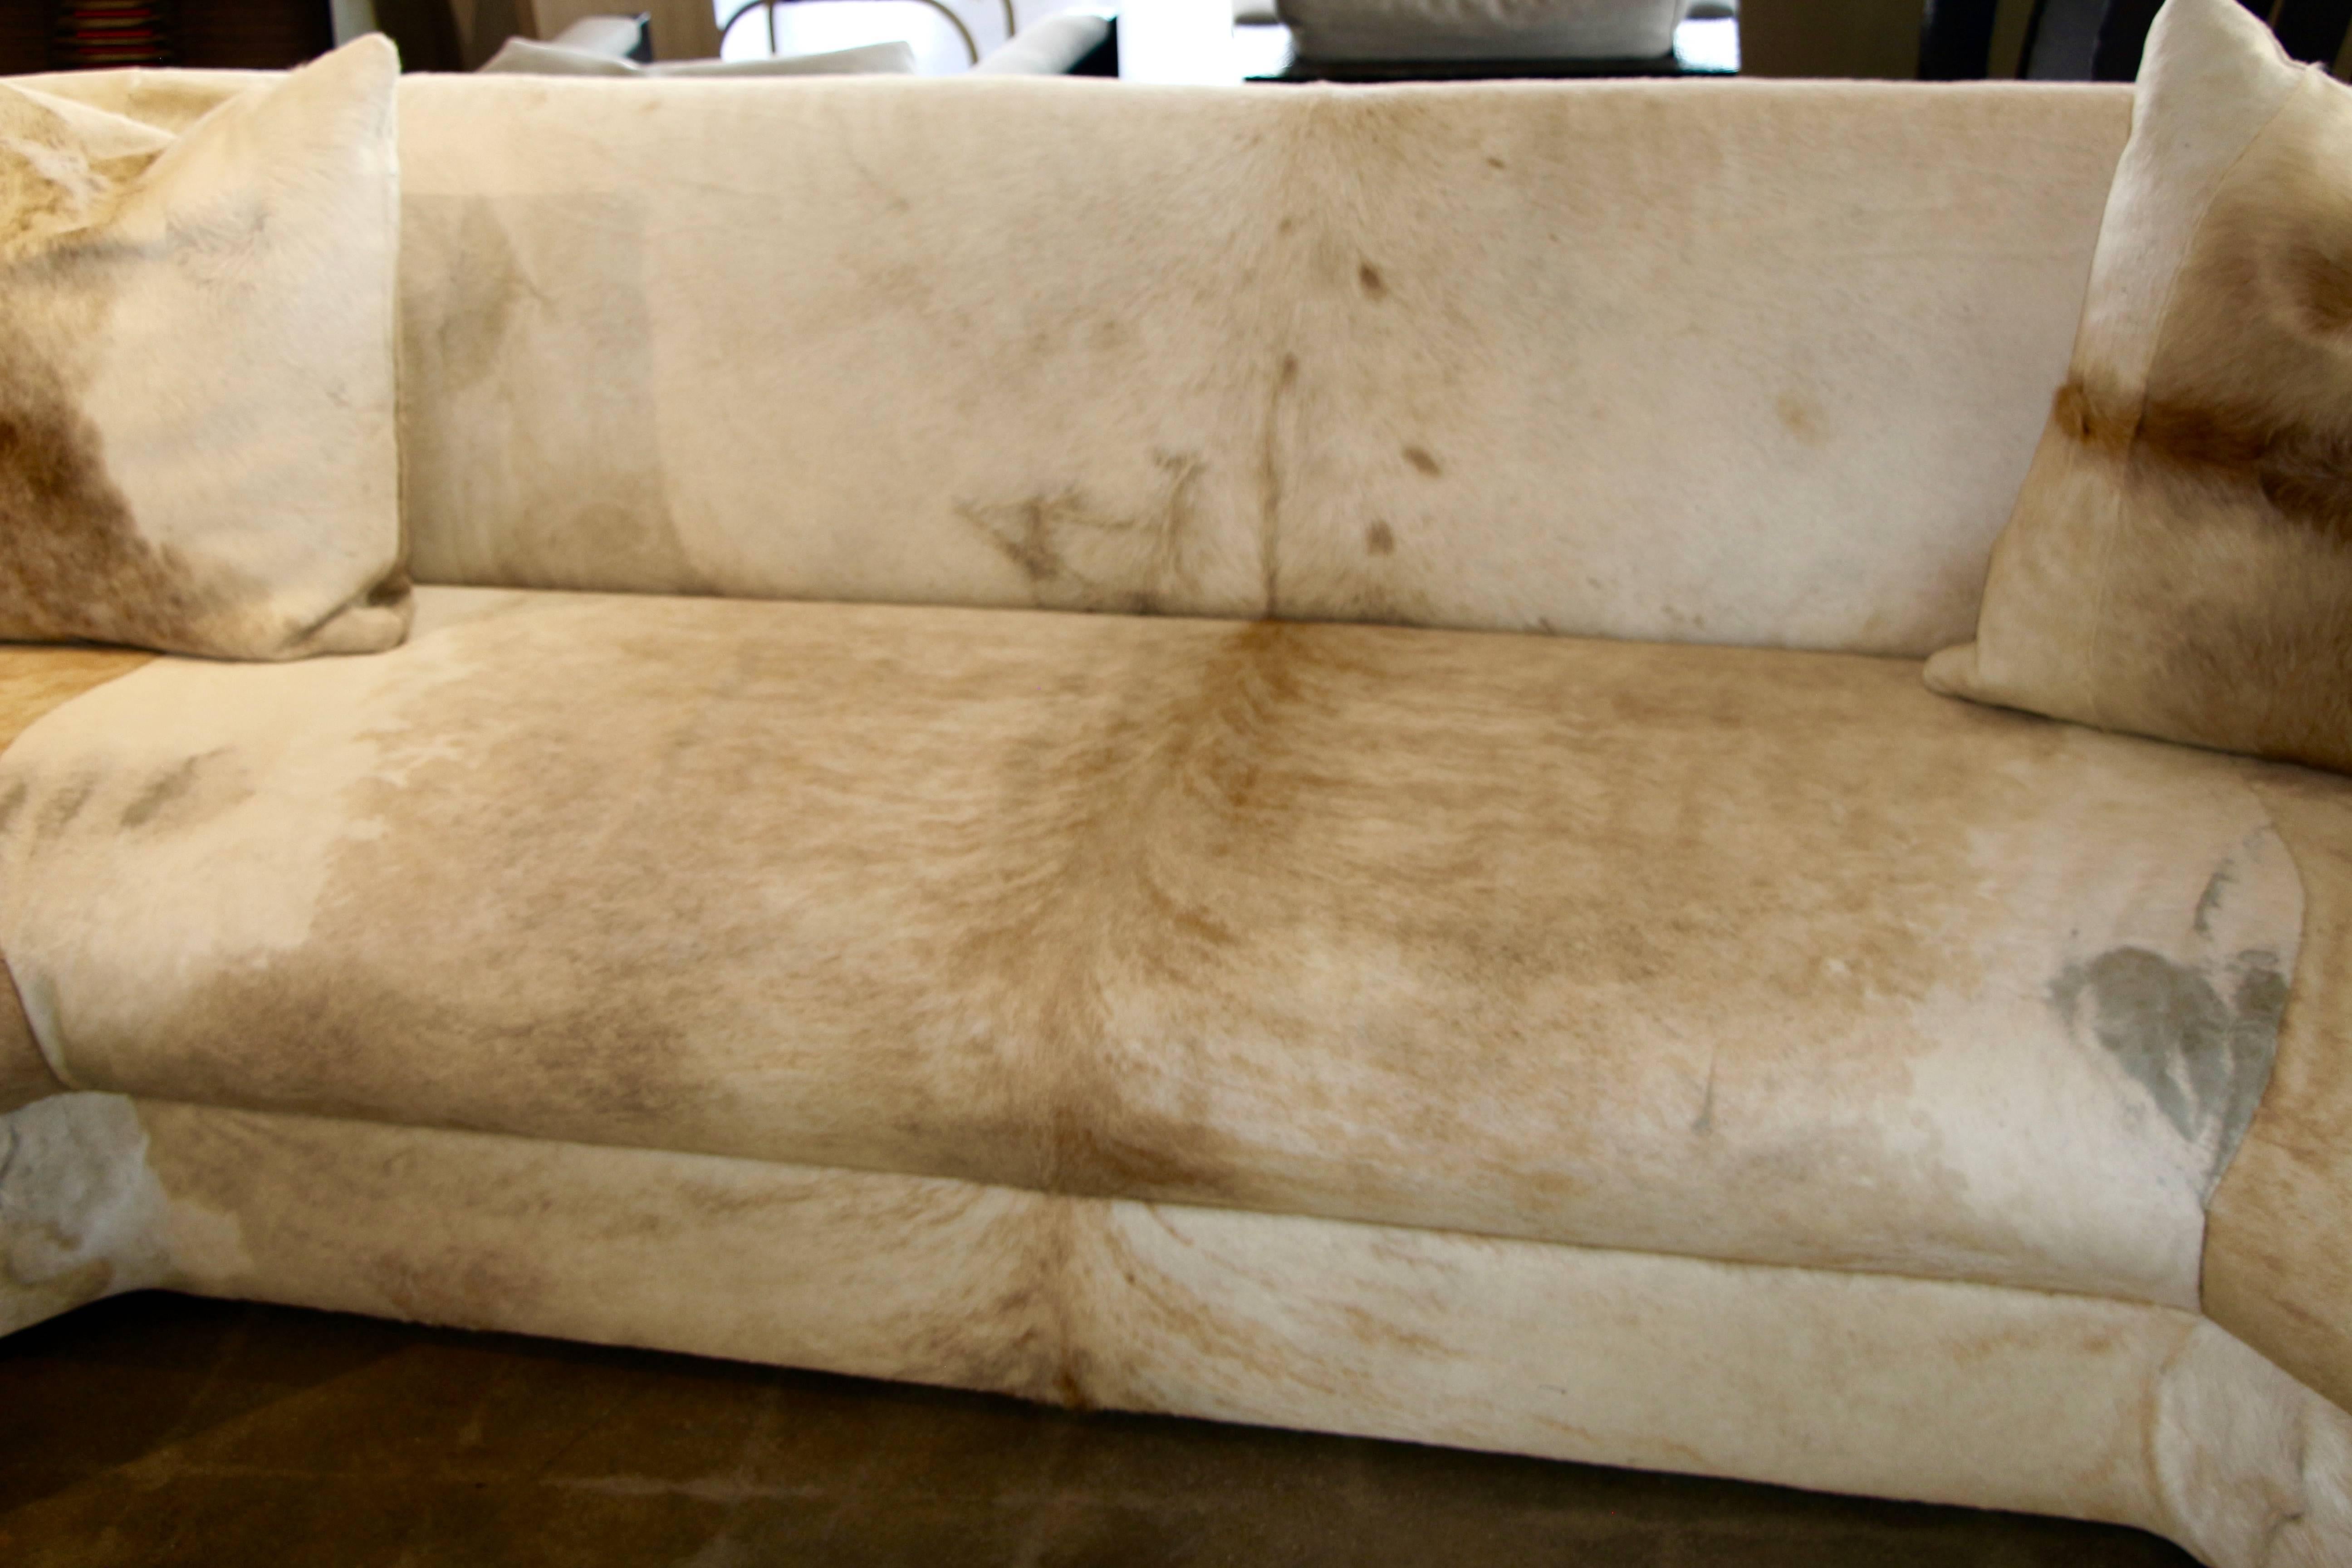 cowhide sectional sofa